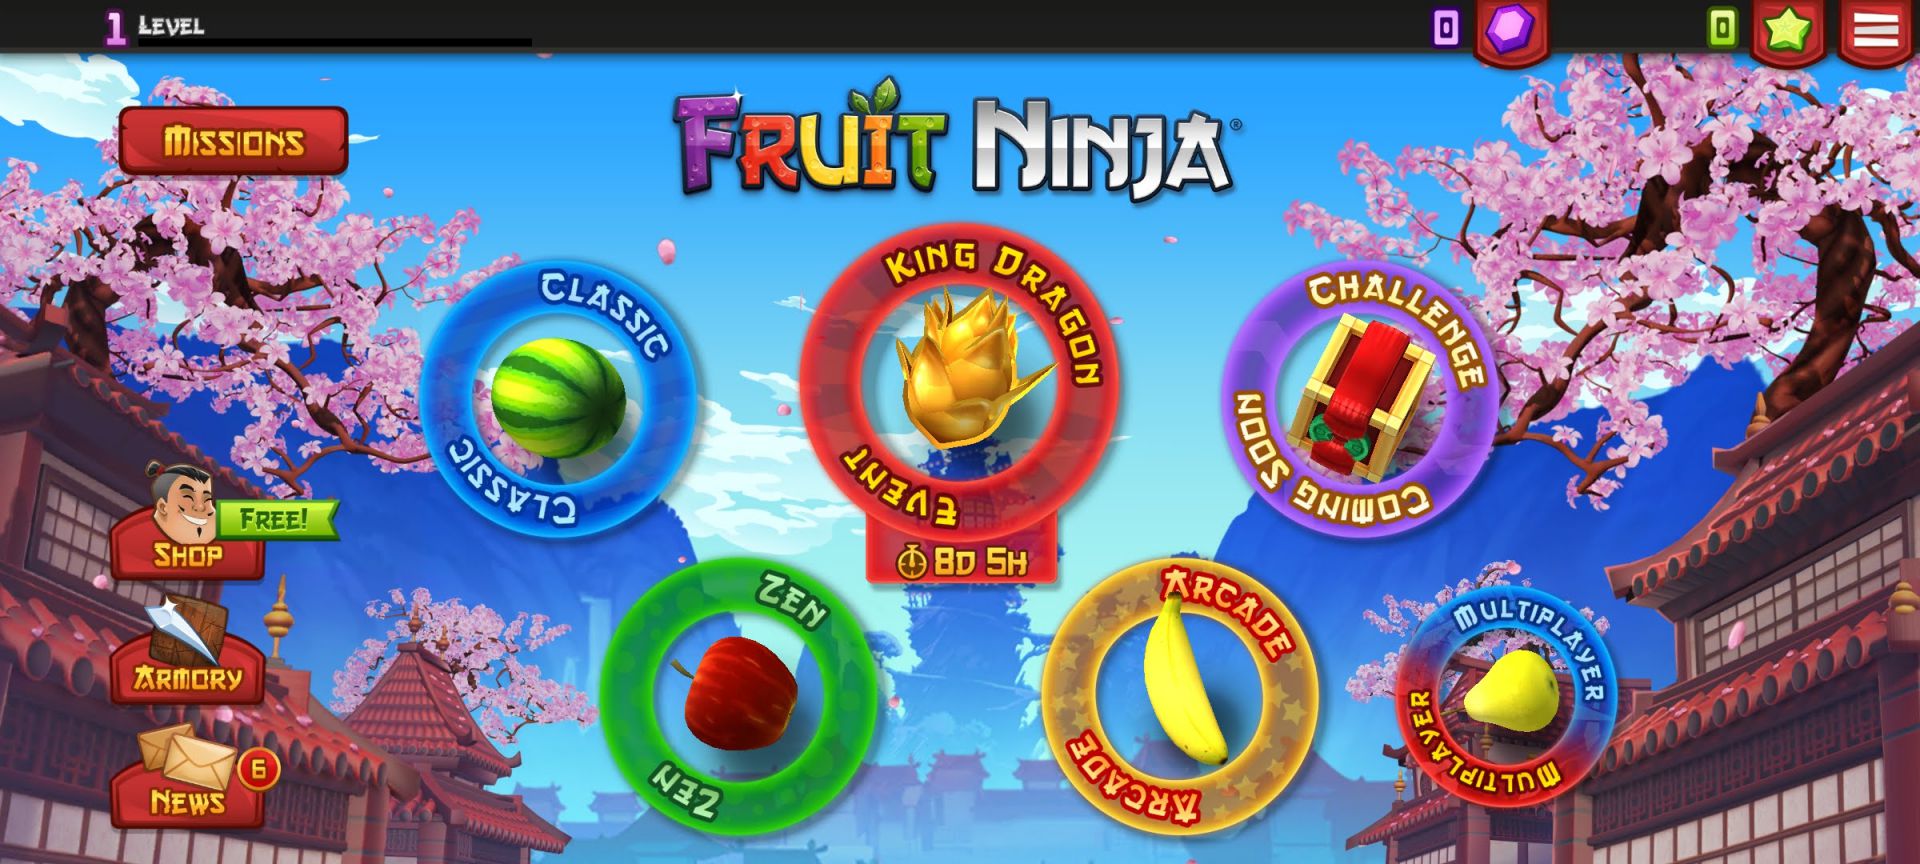 Fruit Ninja Classic 2.4.6 APK Download by Halfbrick Studios - APKMirror